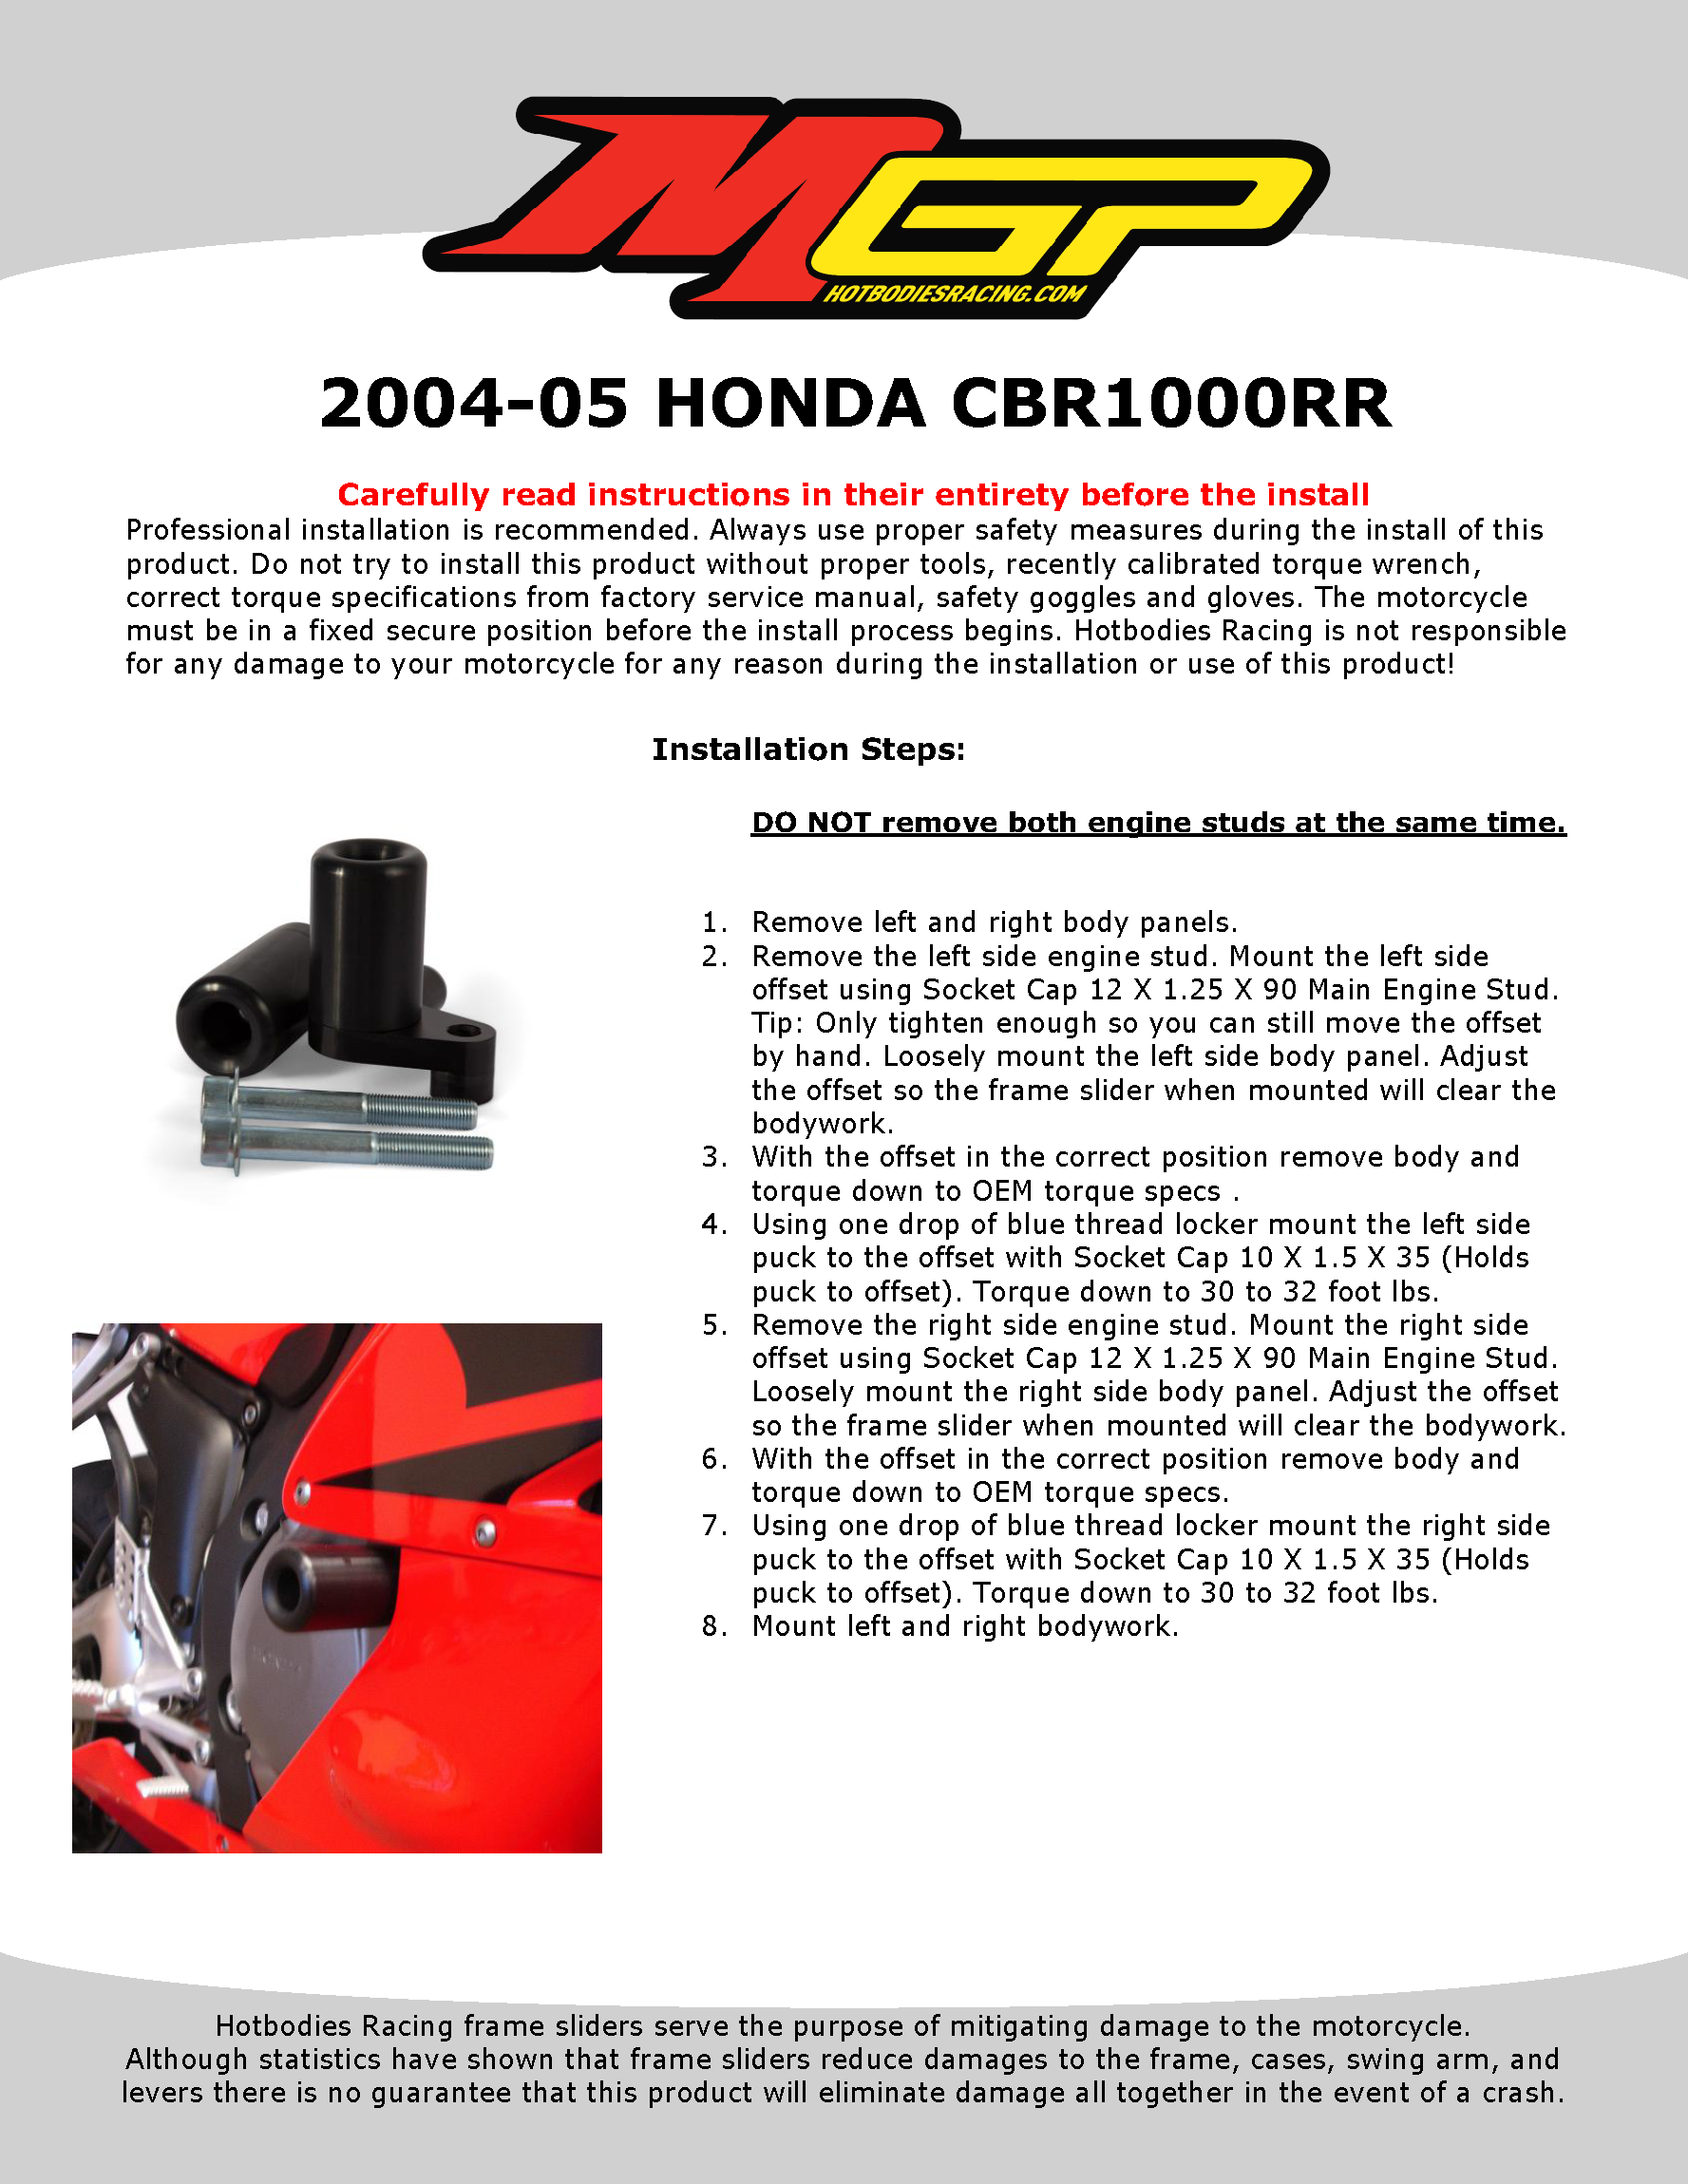 

2004-05 HONDA CBR1000RR Frame Sliders Installation

